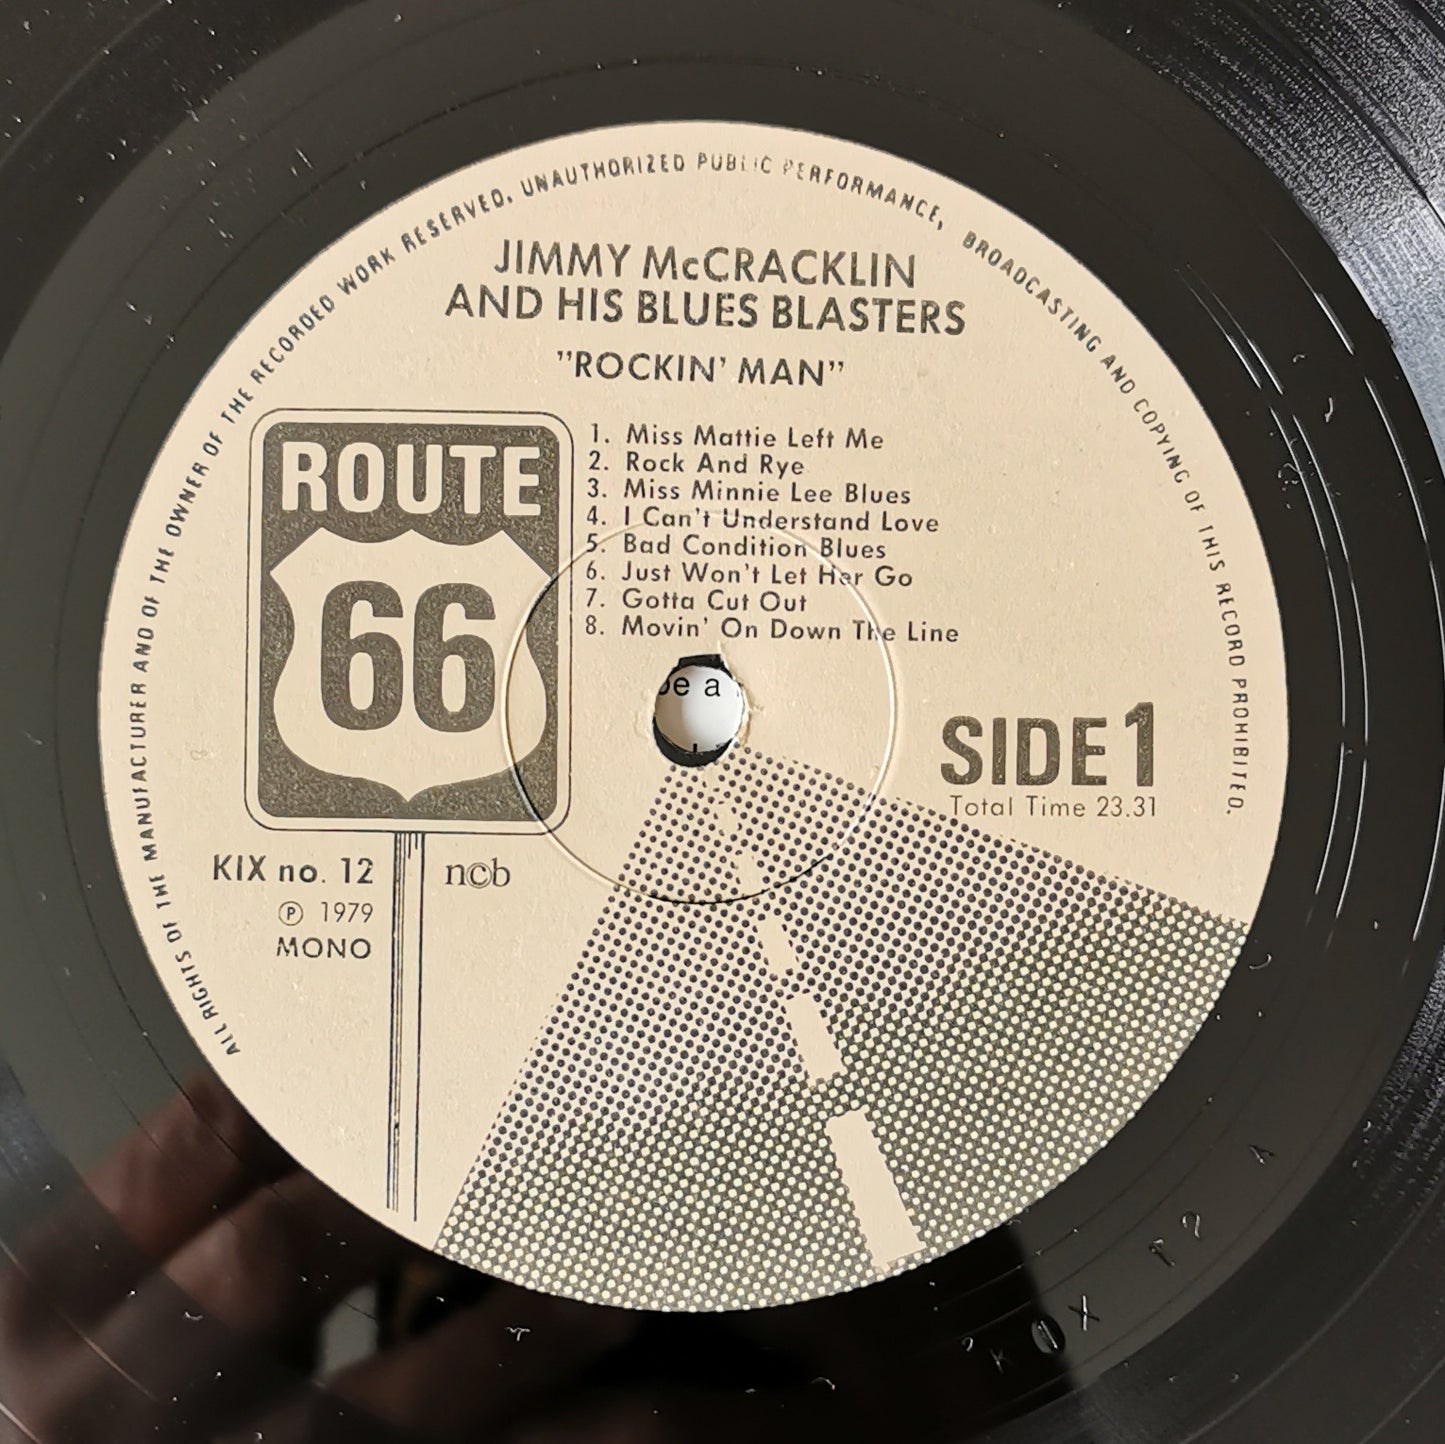 JIMMY MCCRAKLIN AND HIS BLUES BLASTERS - Rockin' Man